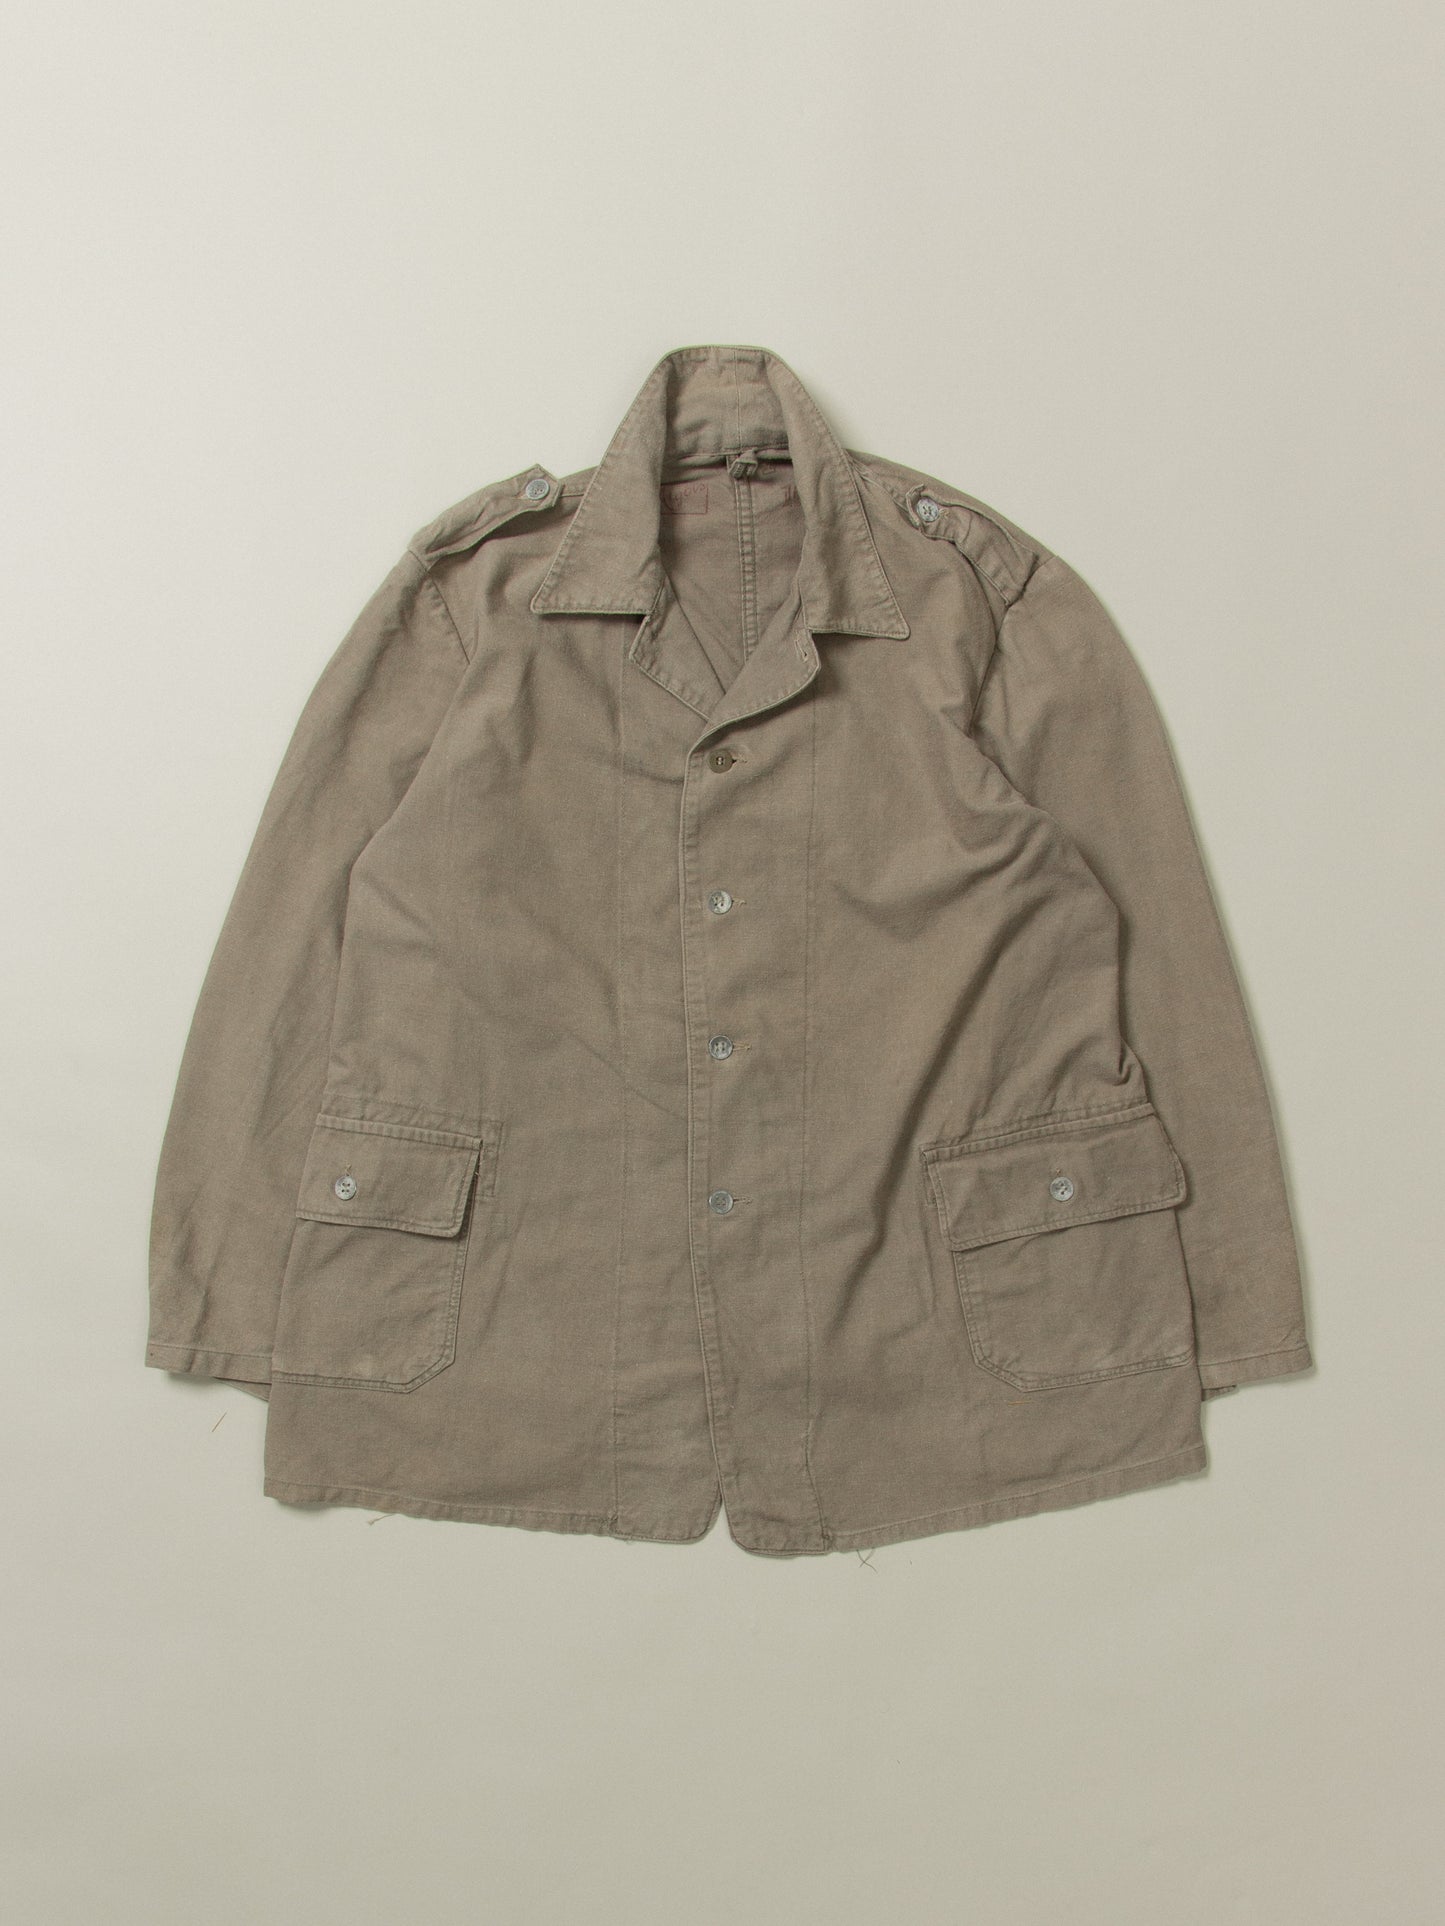 Vtg 1940s Swedish Army Chore Jacket